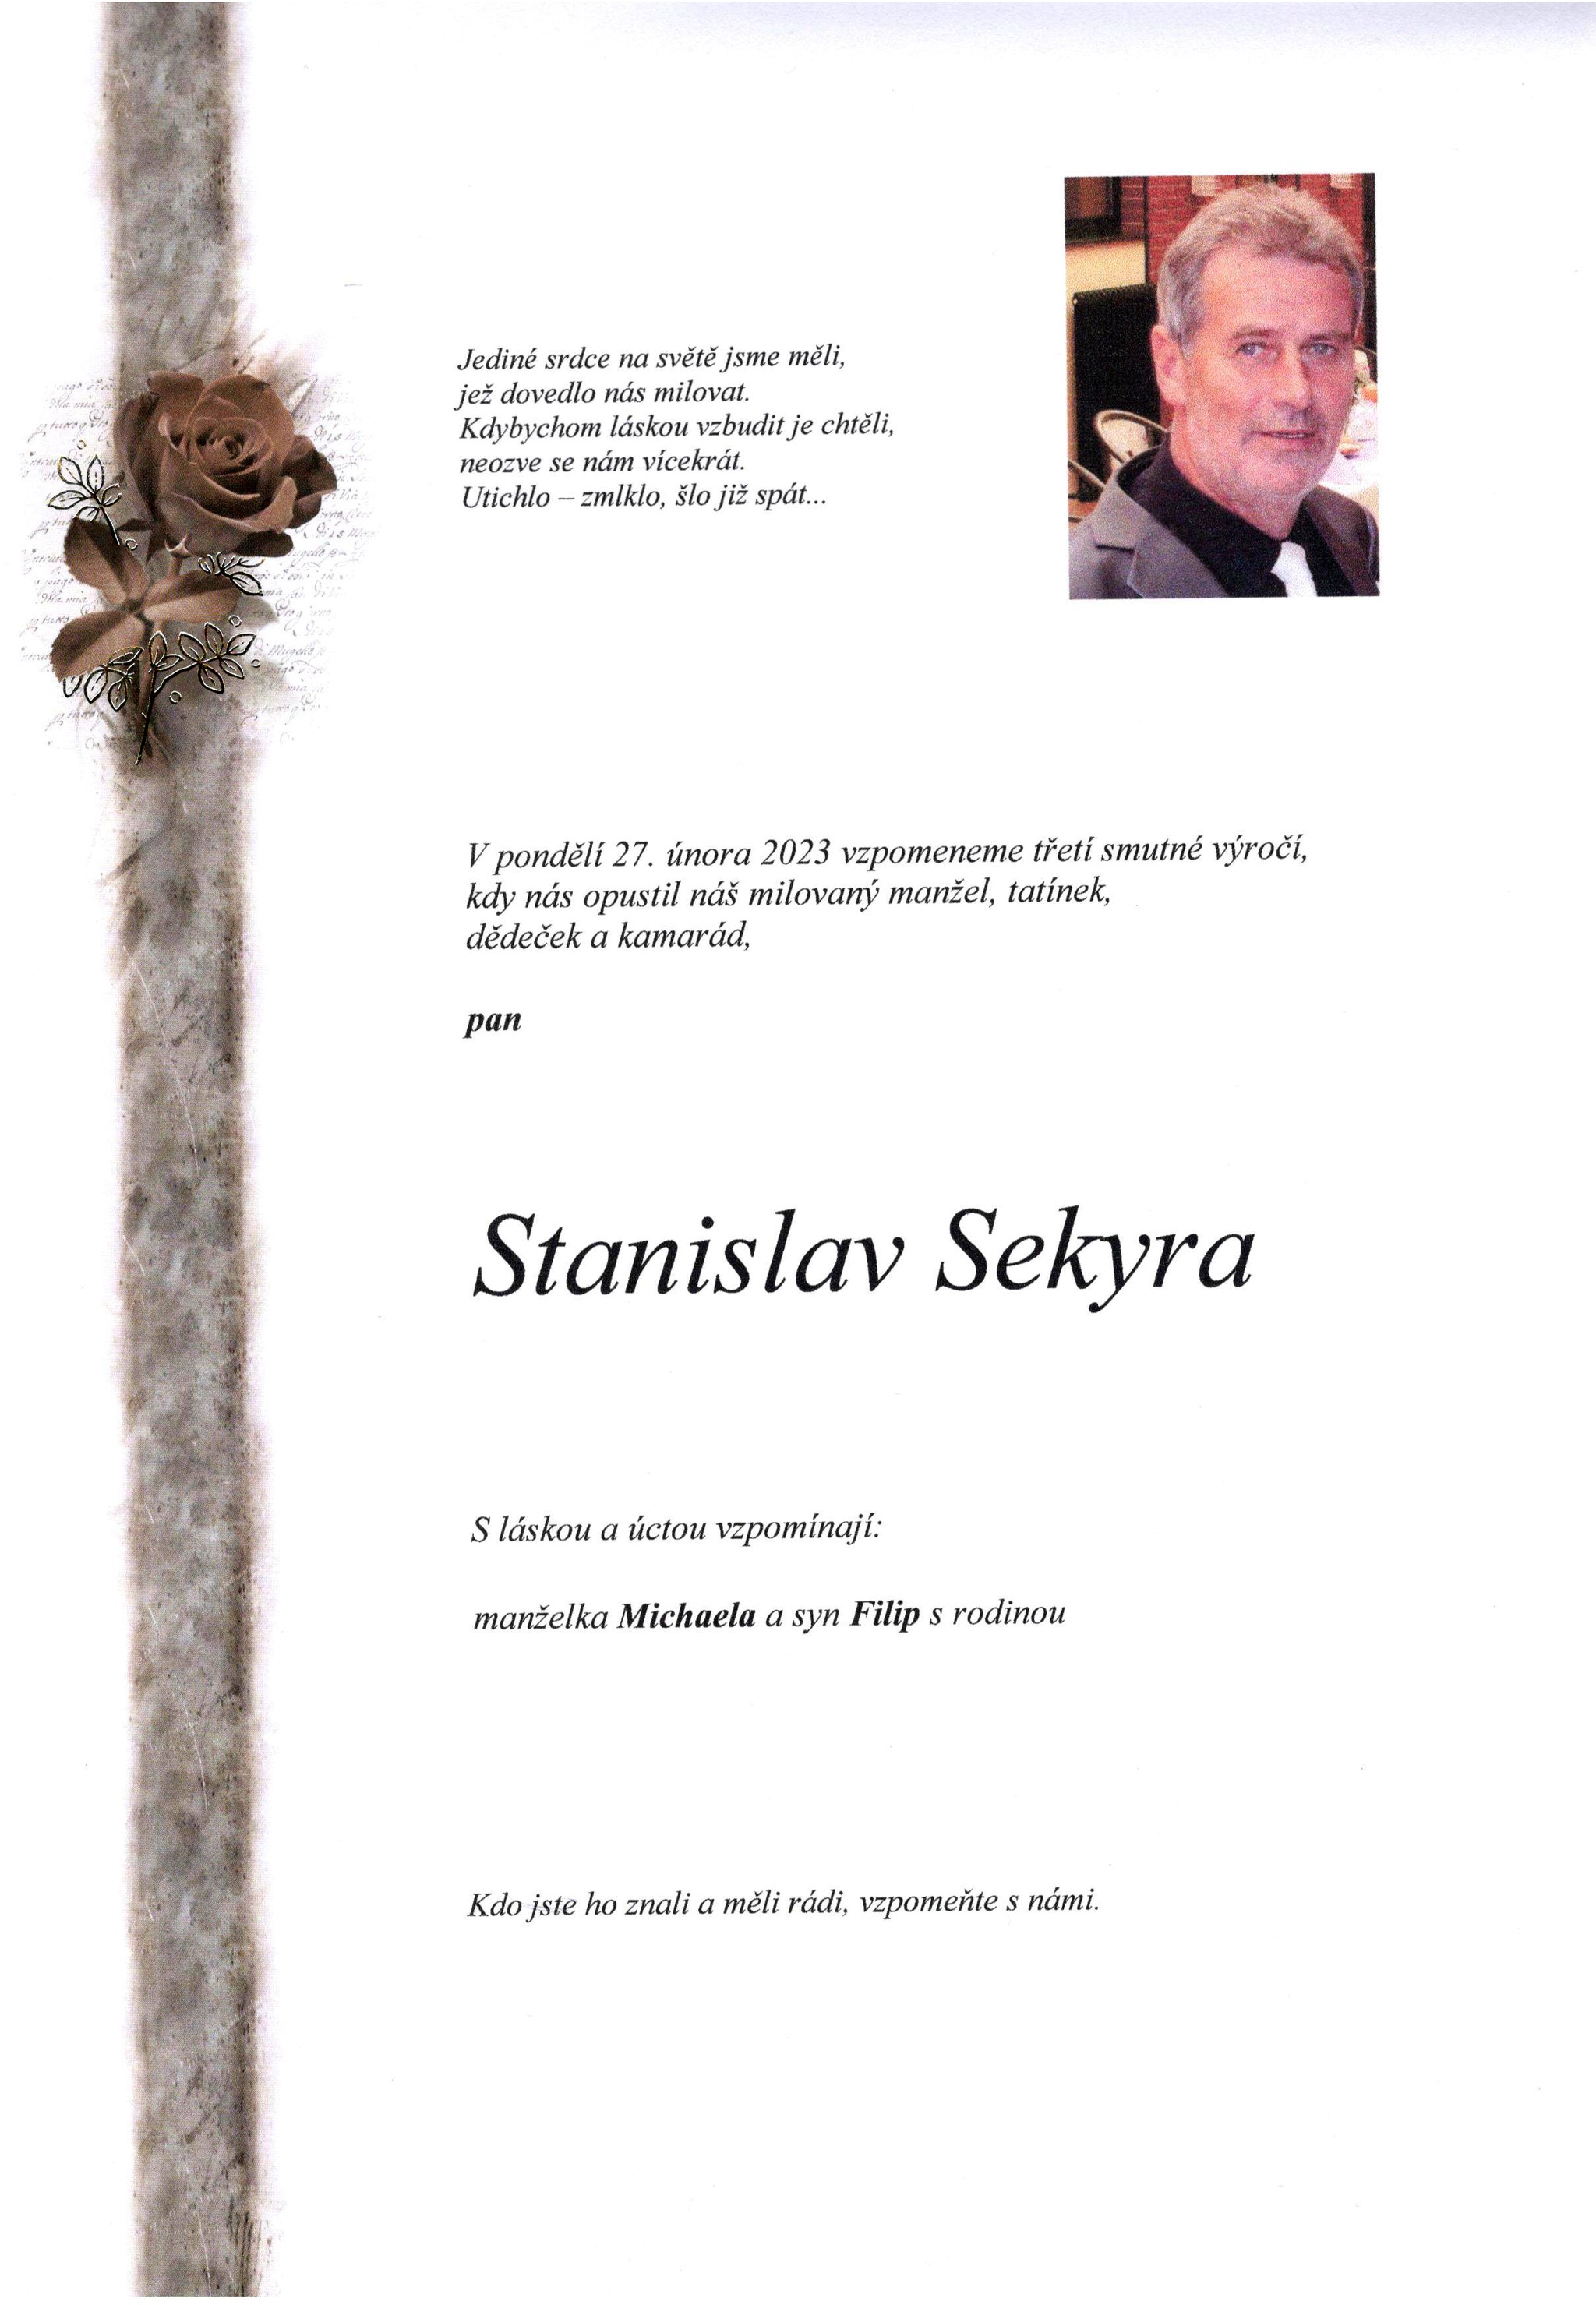 Stanislav Sekyra